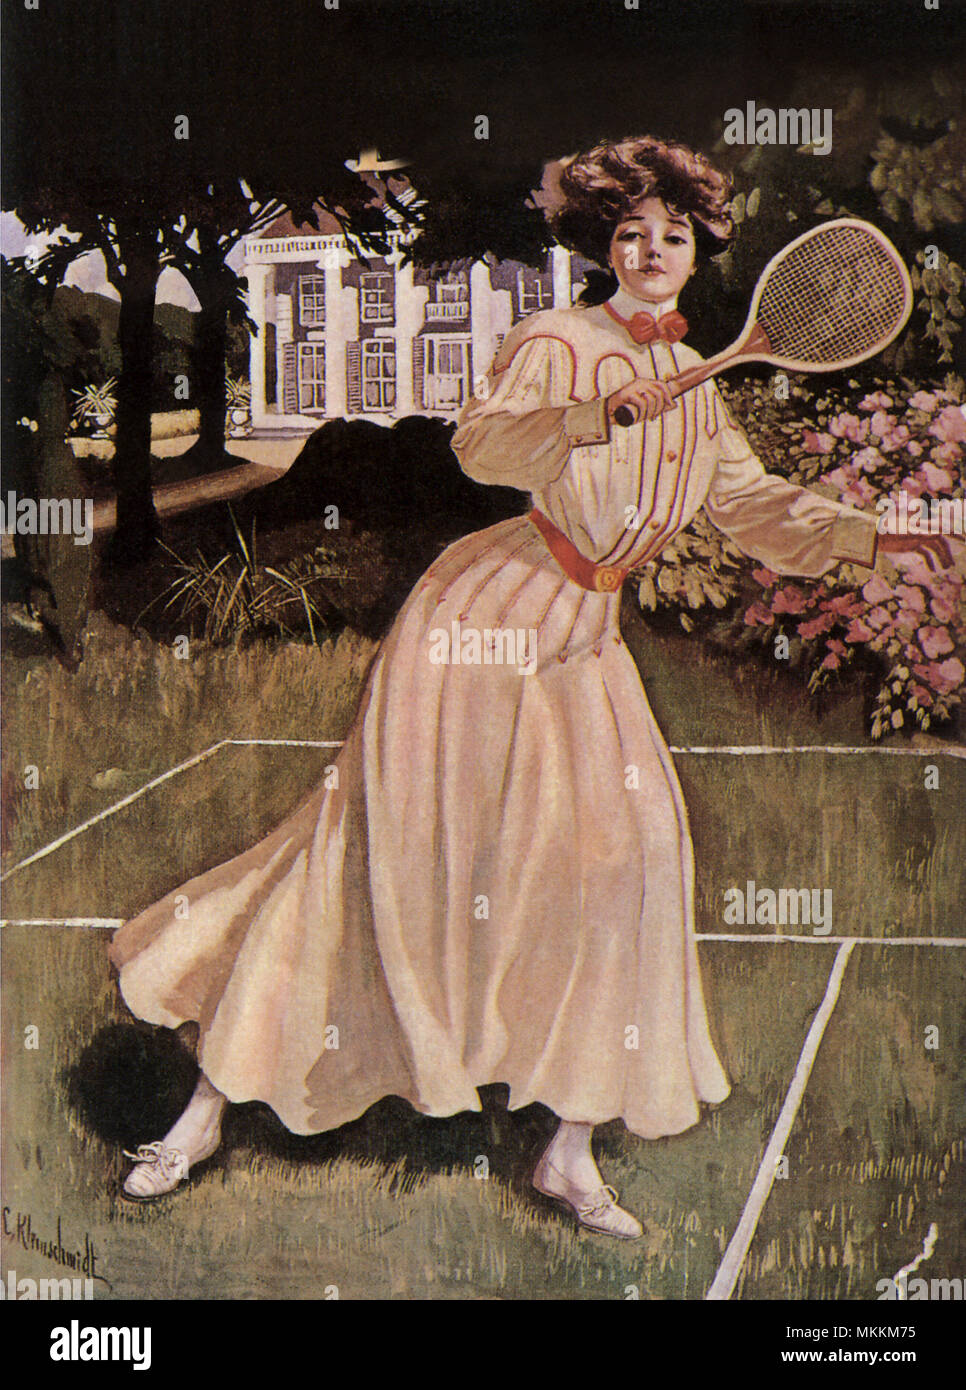 Lady Playing Tennis Stock Photo